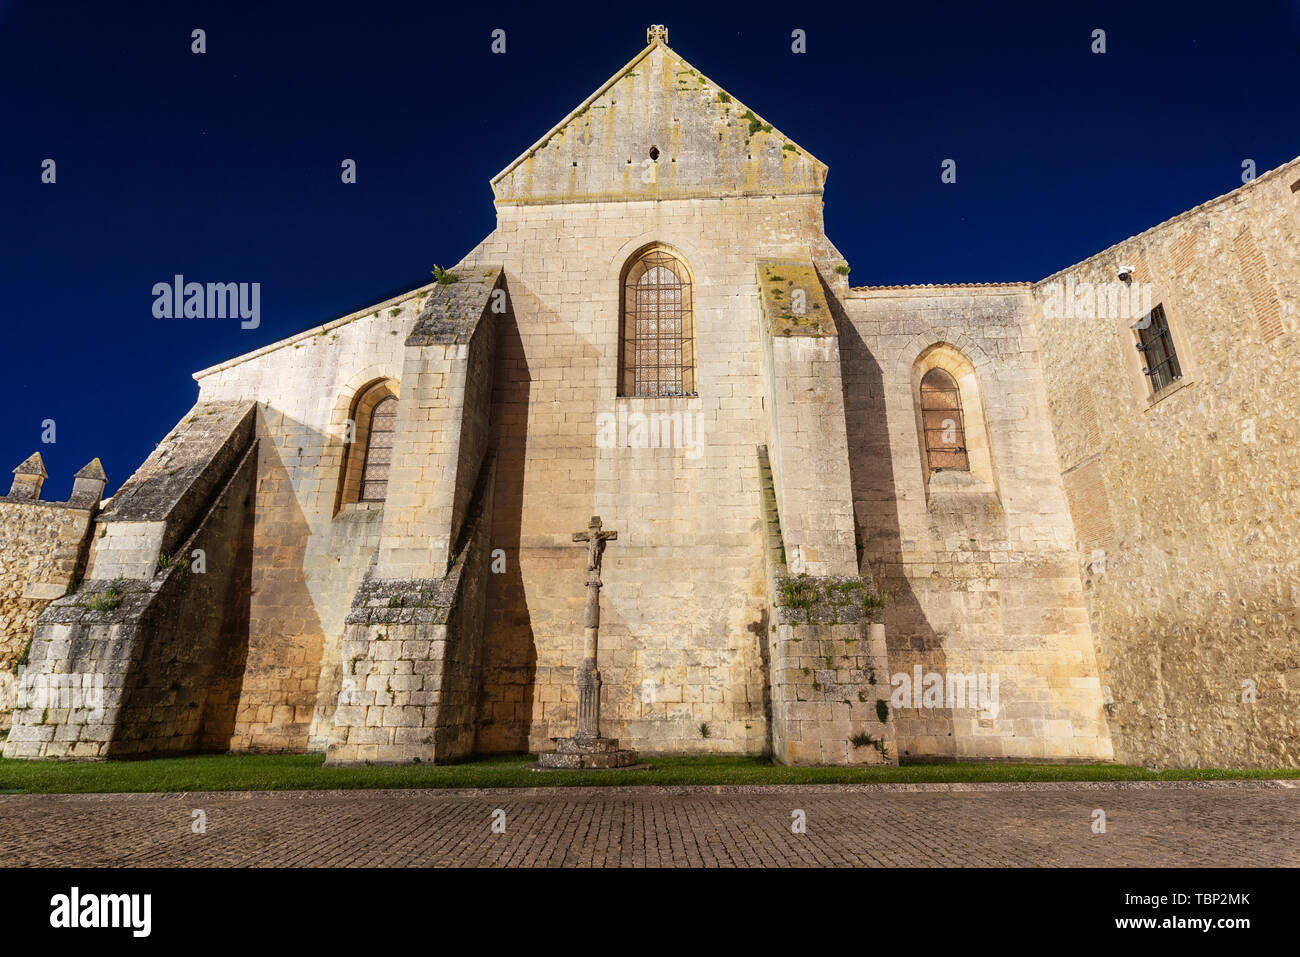 Monasterio de las huelgas hi-res stock photography and images - Alamy